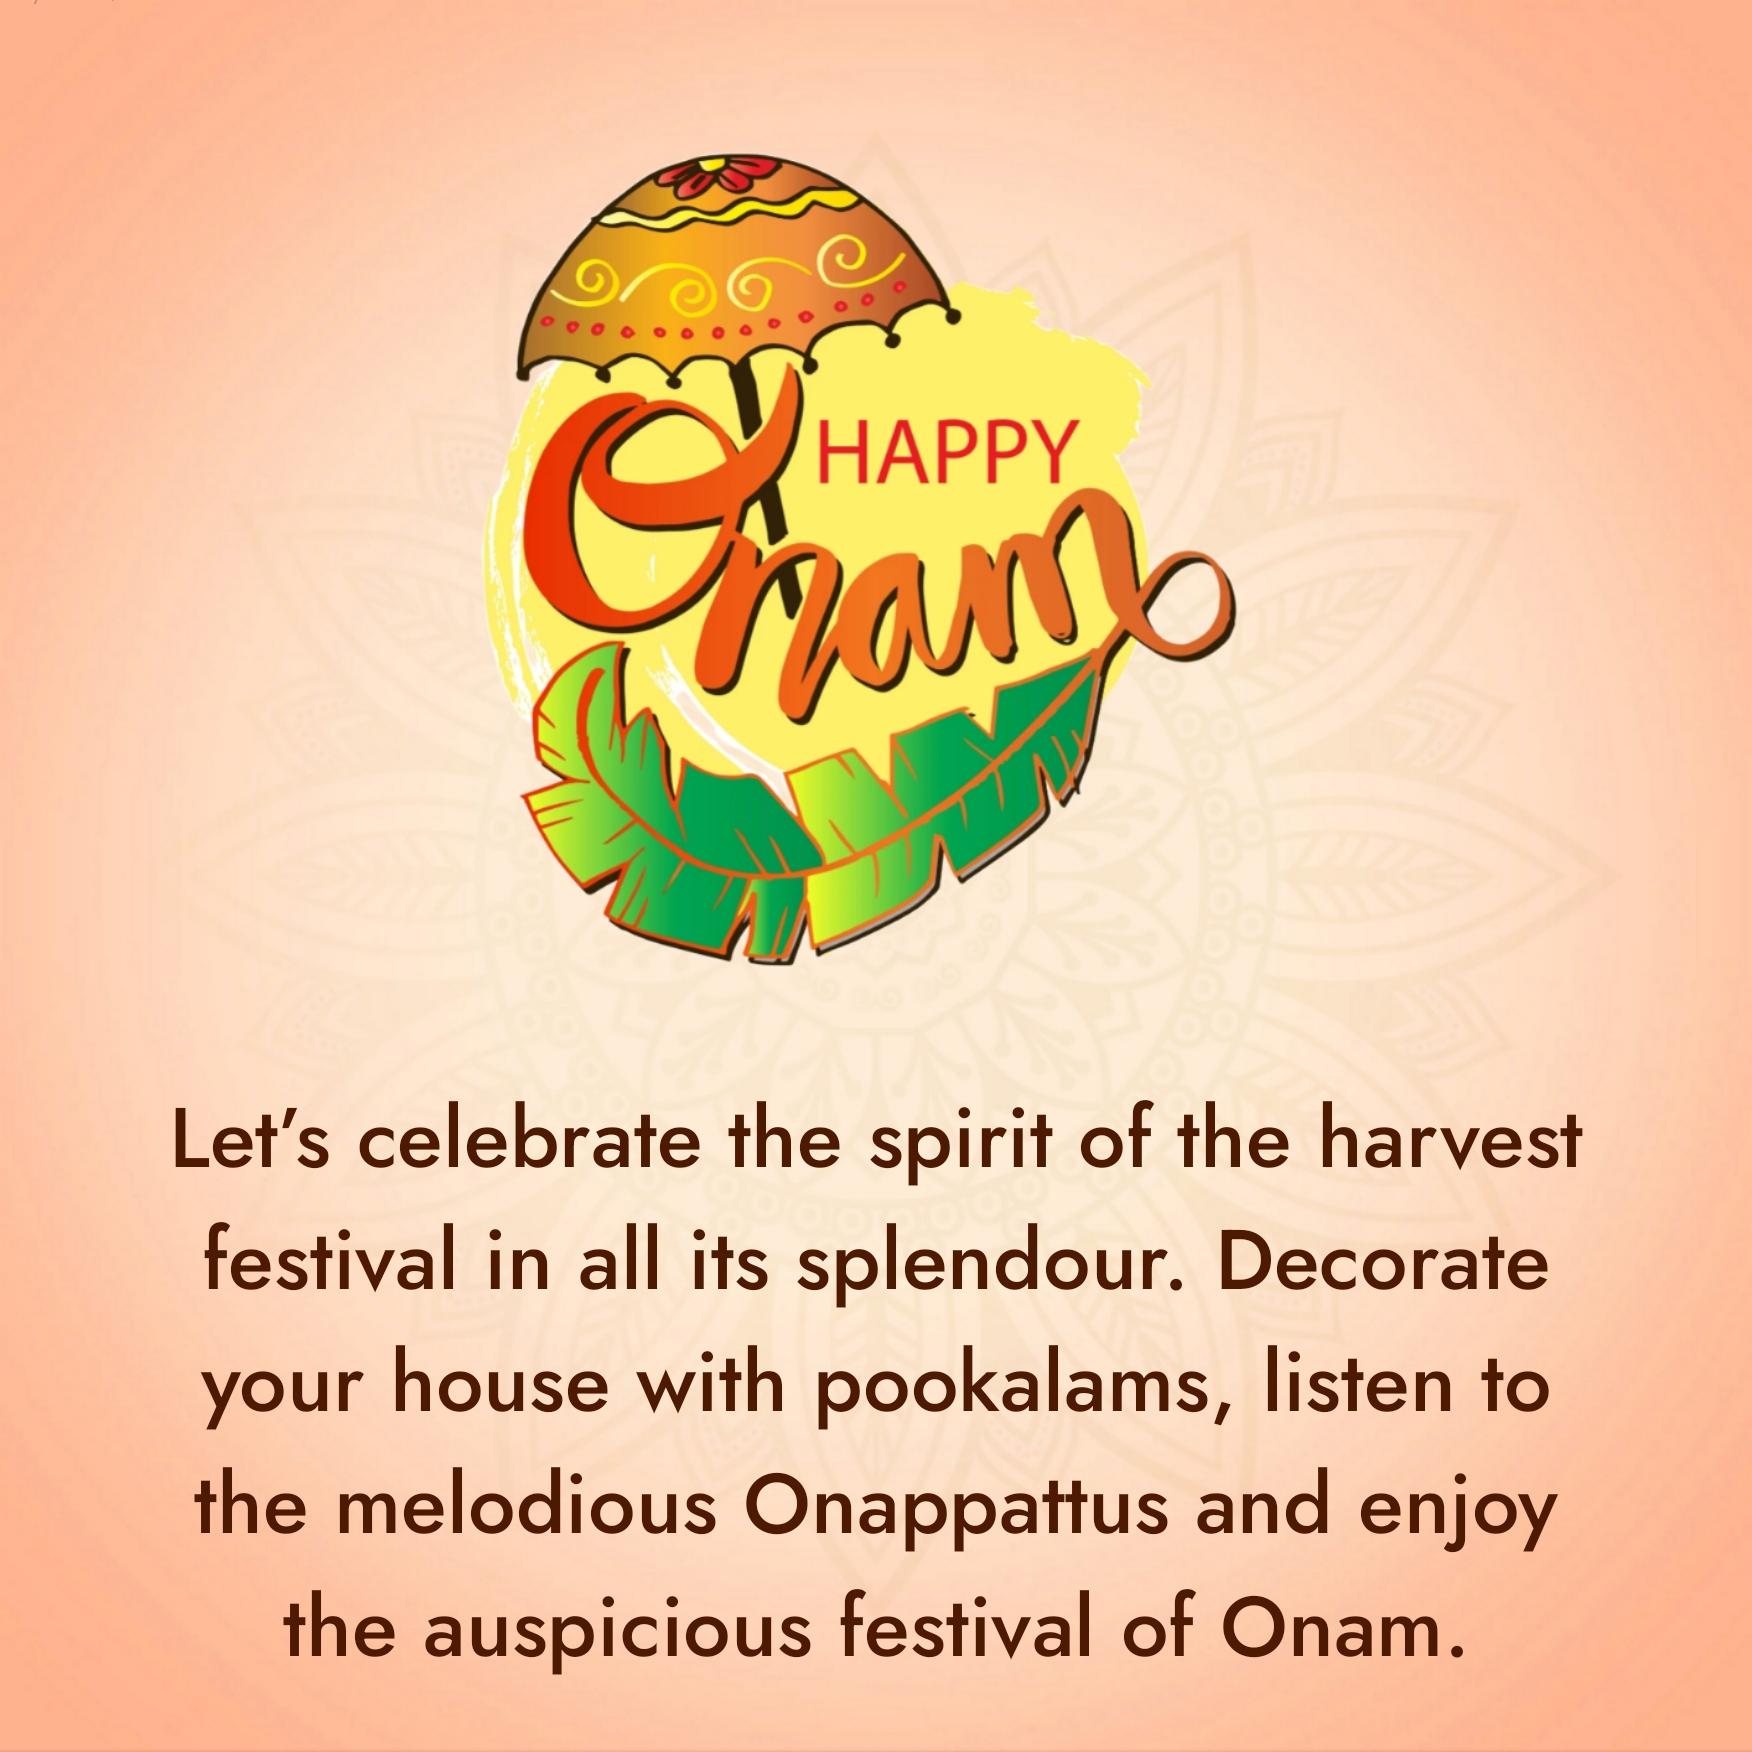 Lets celebrate the spirit of the harvest festival in all its splendour